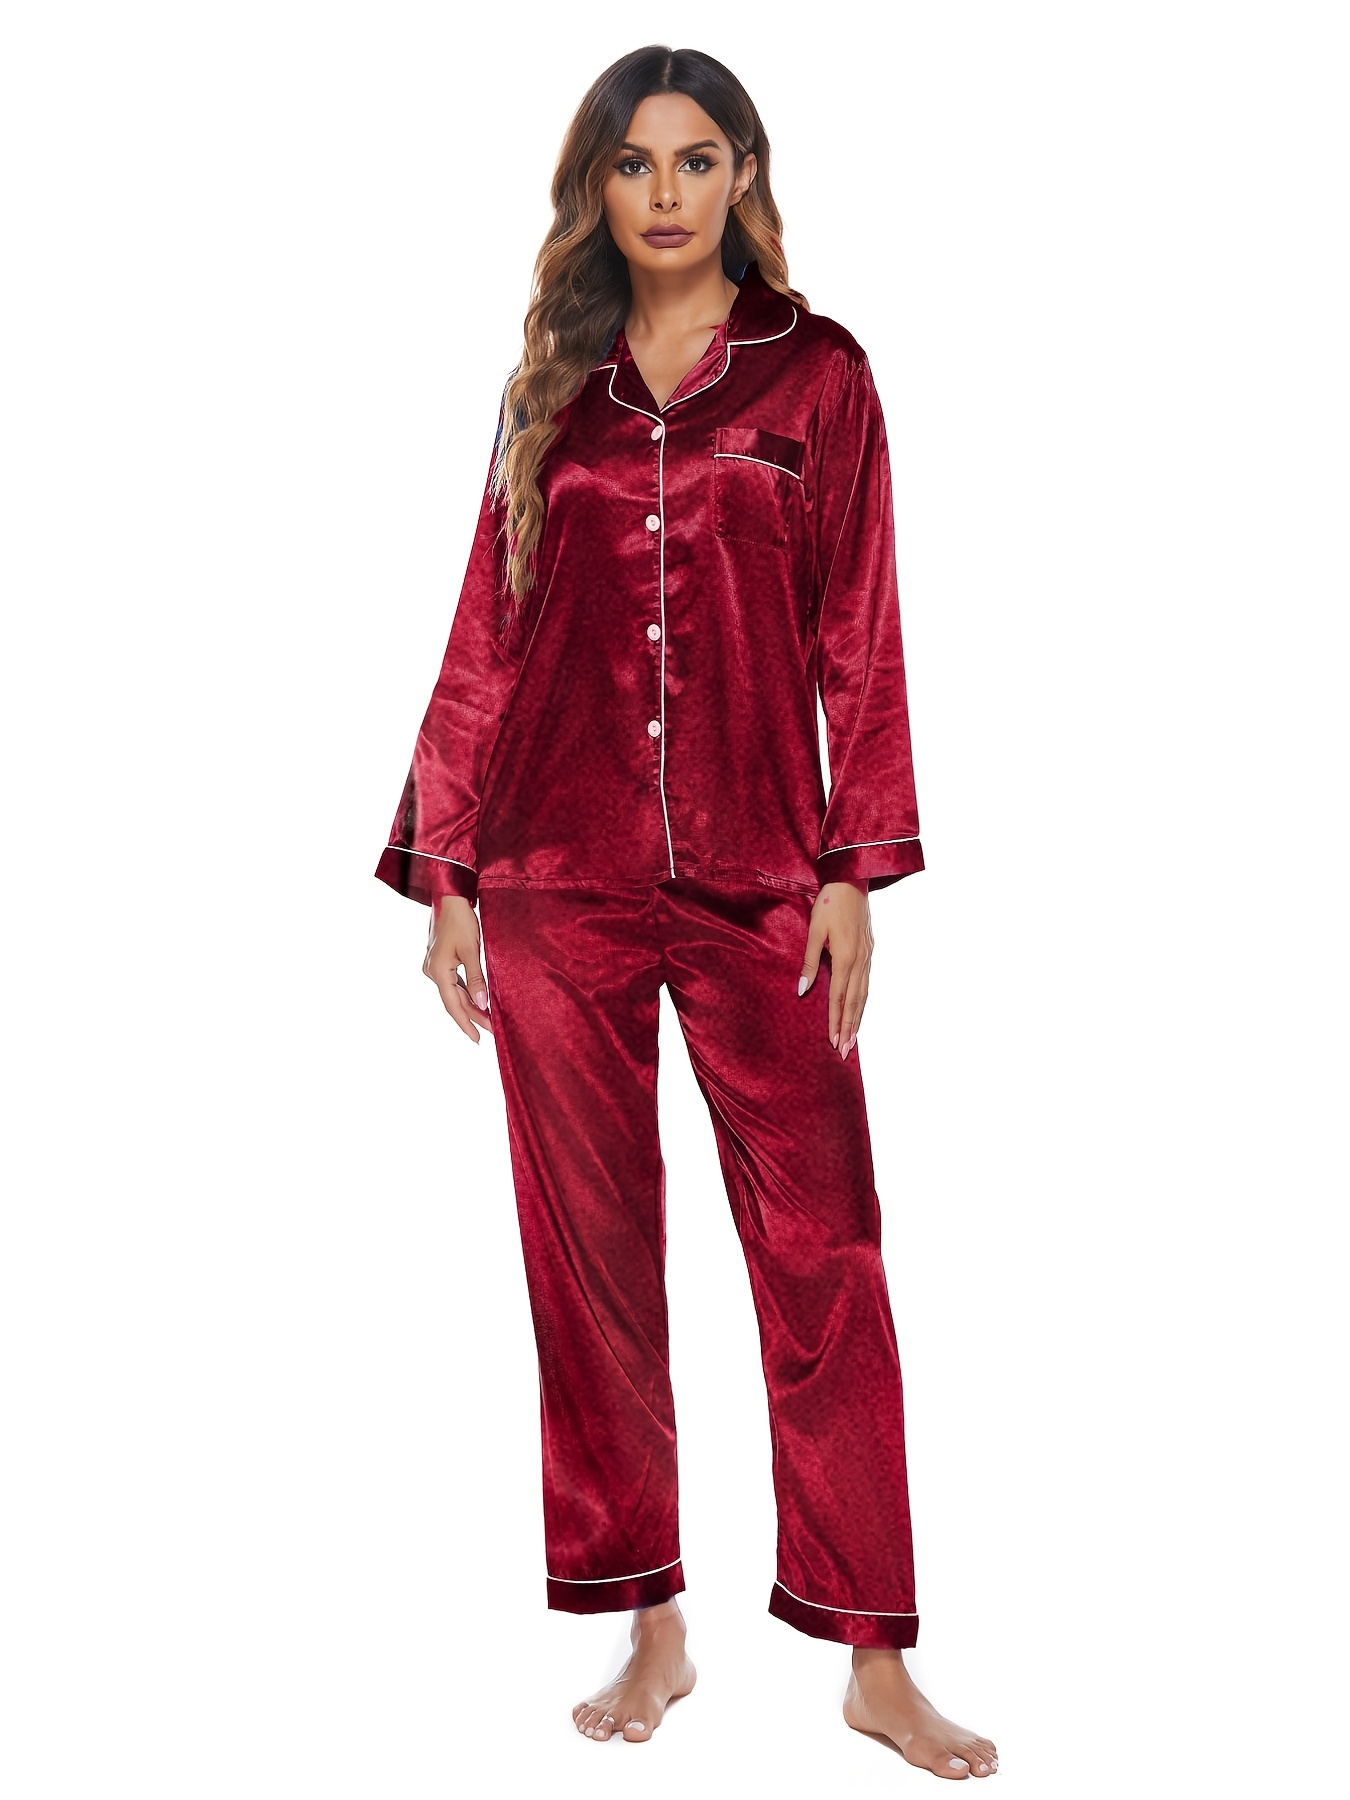 satin solid pajama set long sleeve button up top elastic waistband solid pants womens sleepwear loungewear